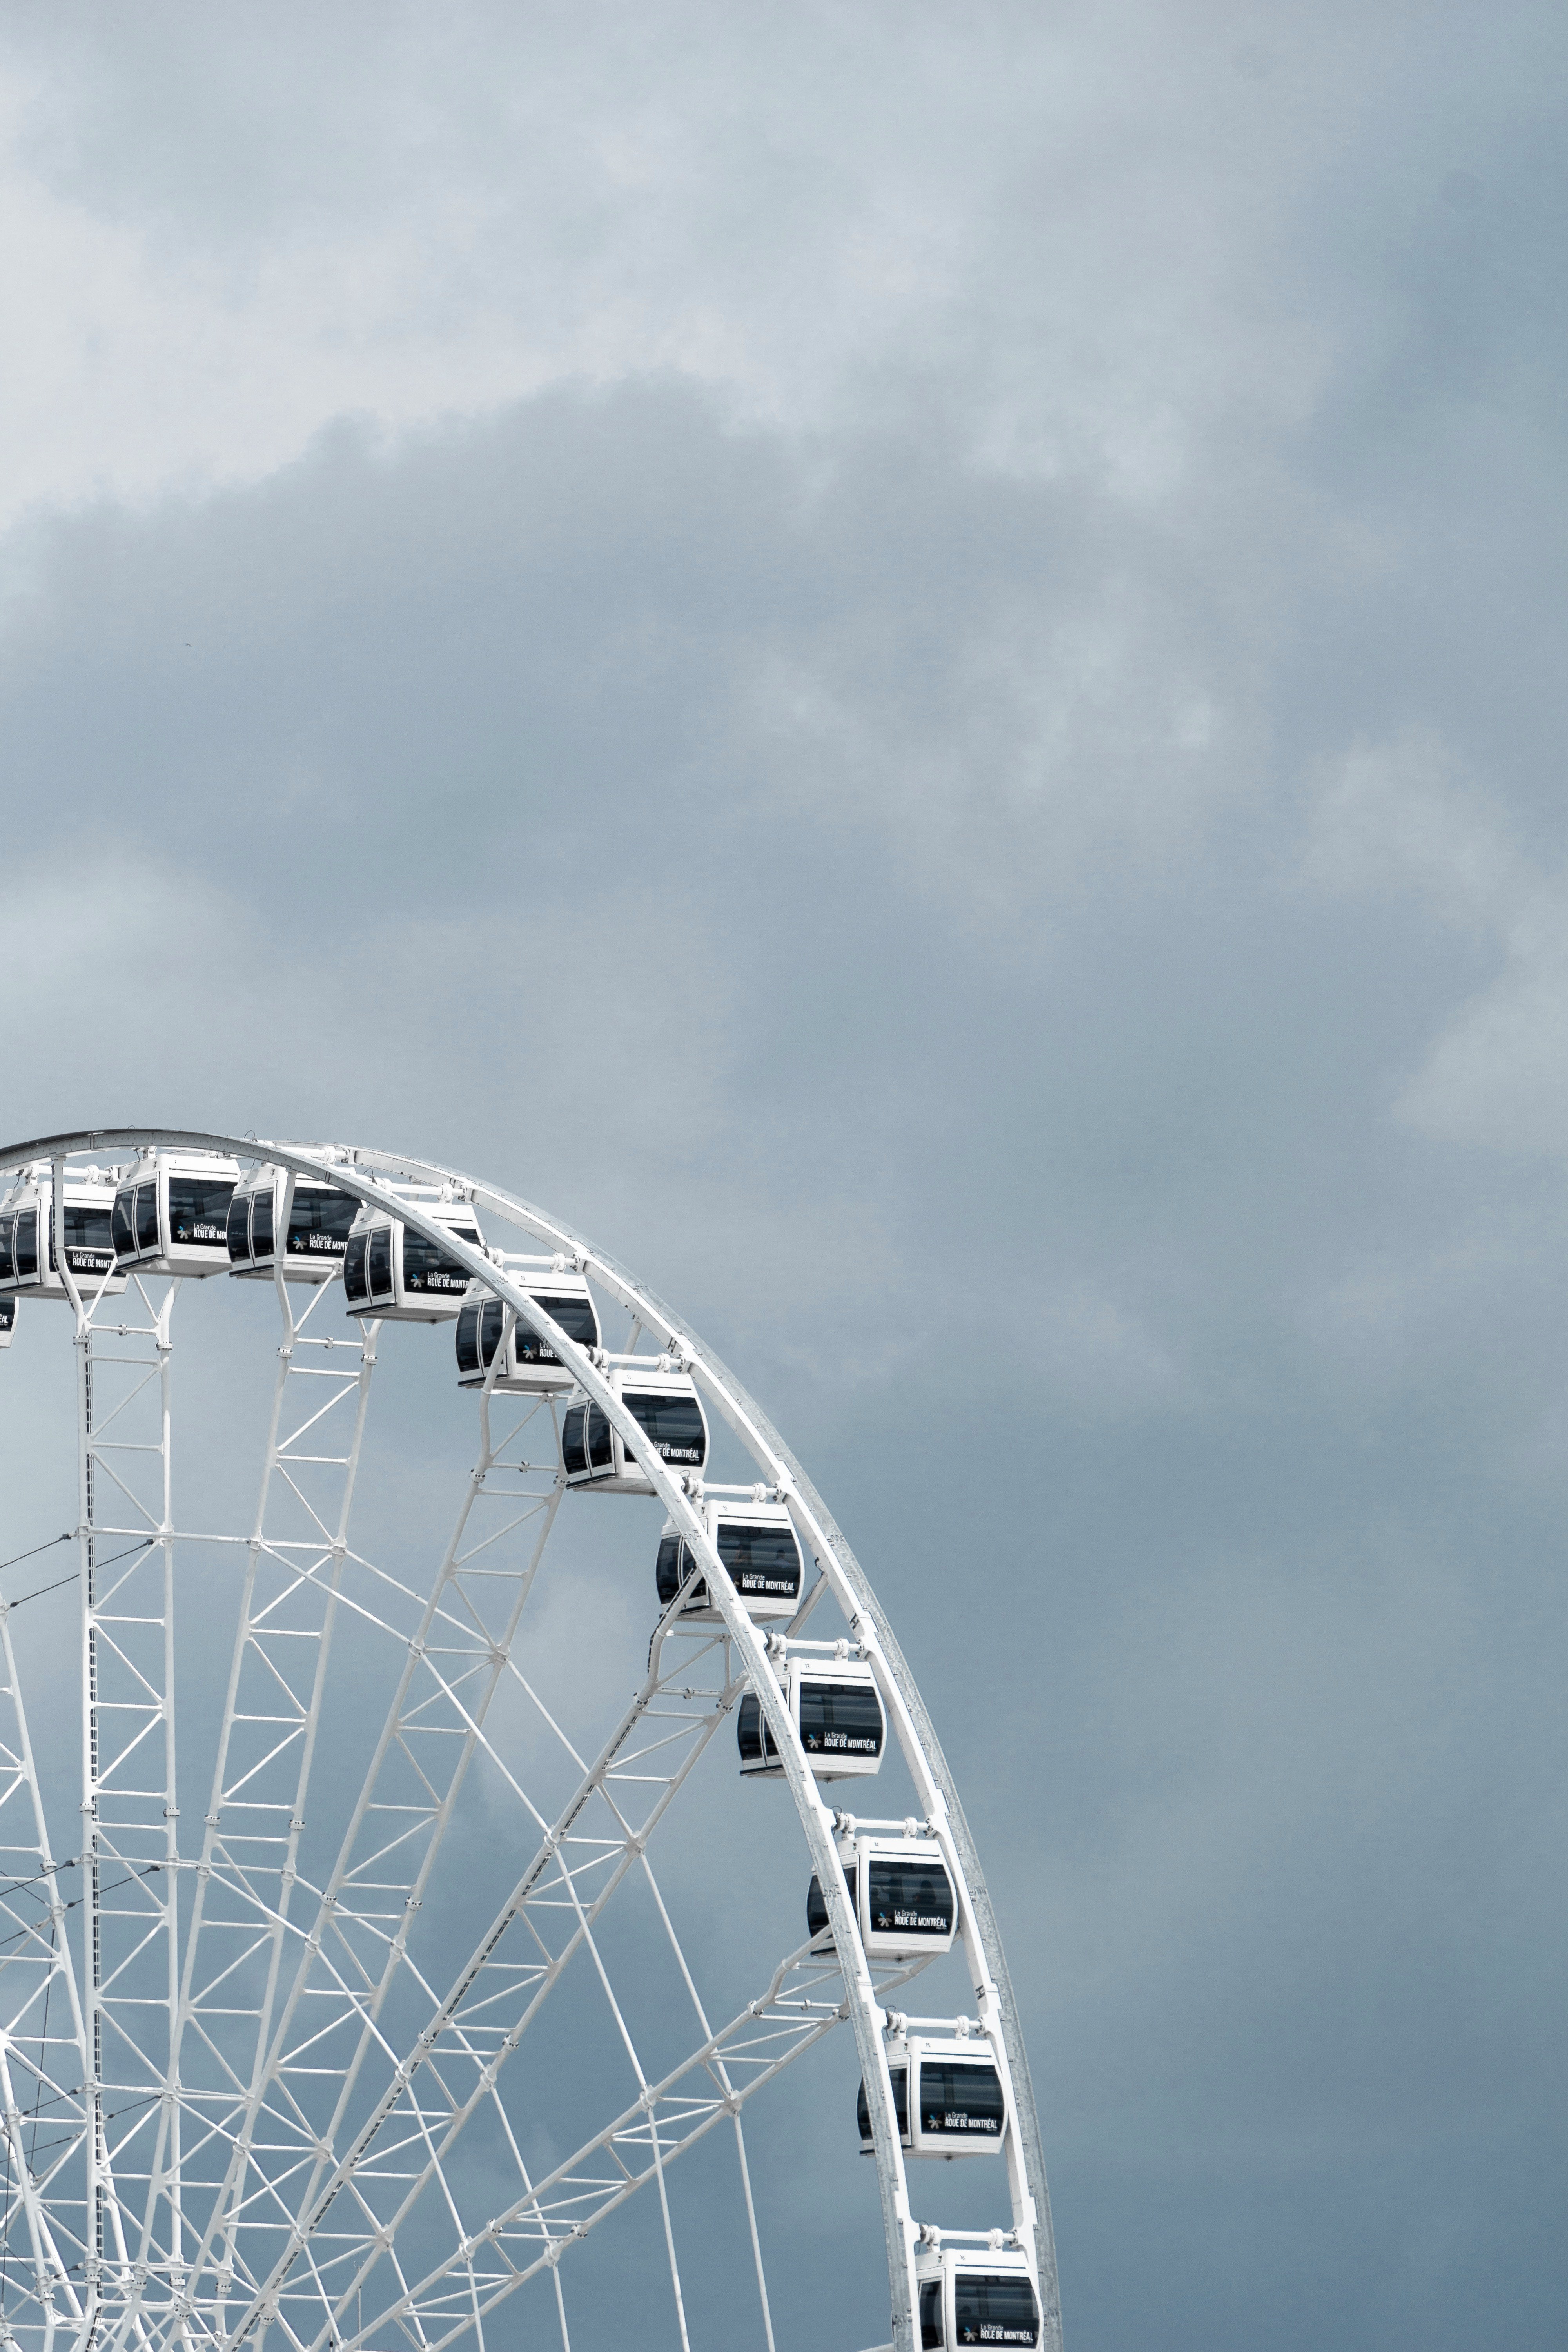 white ferris wheel under cloudy sky during daytime